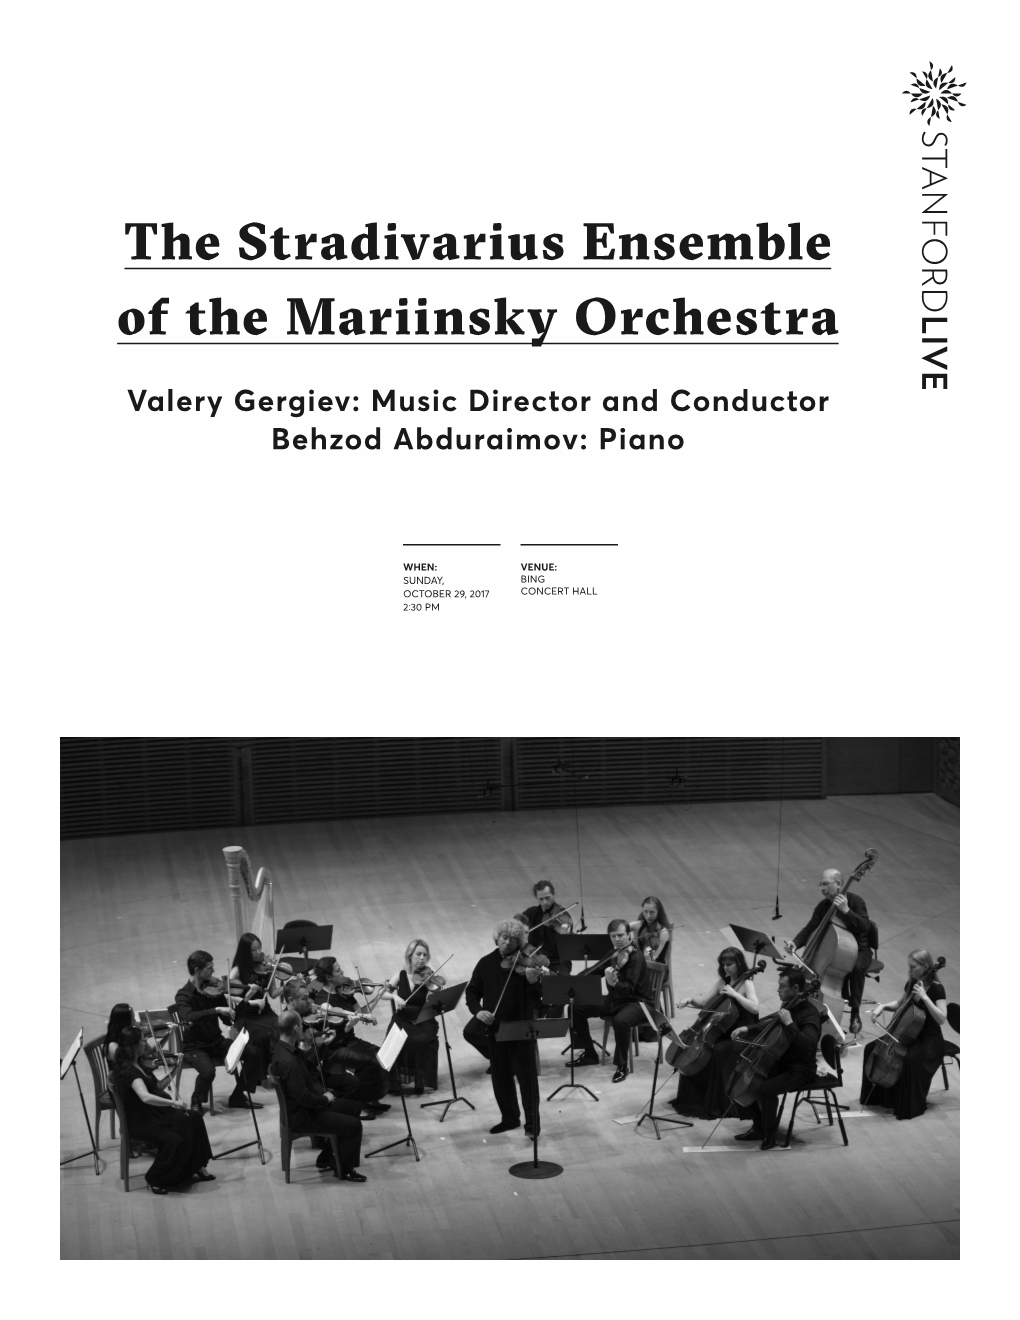 The Stradivarius Ensemble of the Mariinsky Orchestra